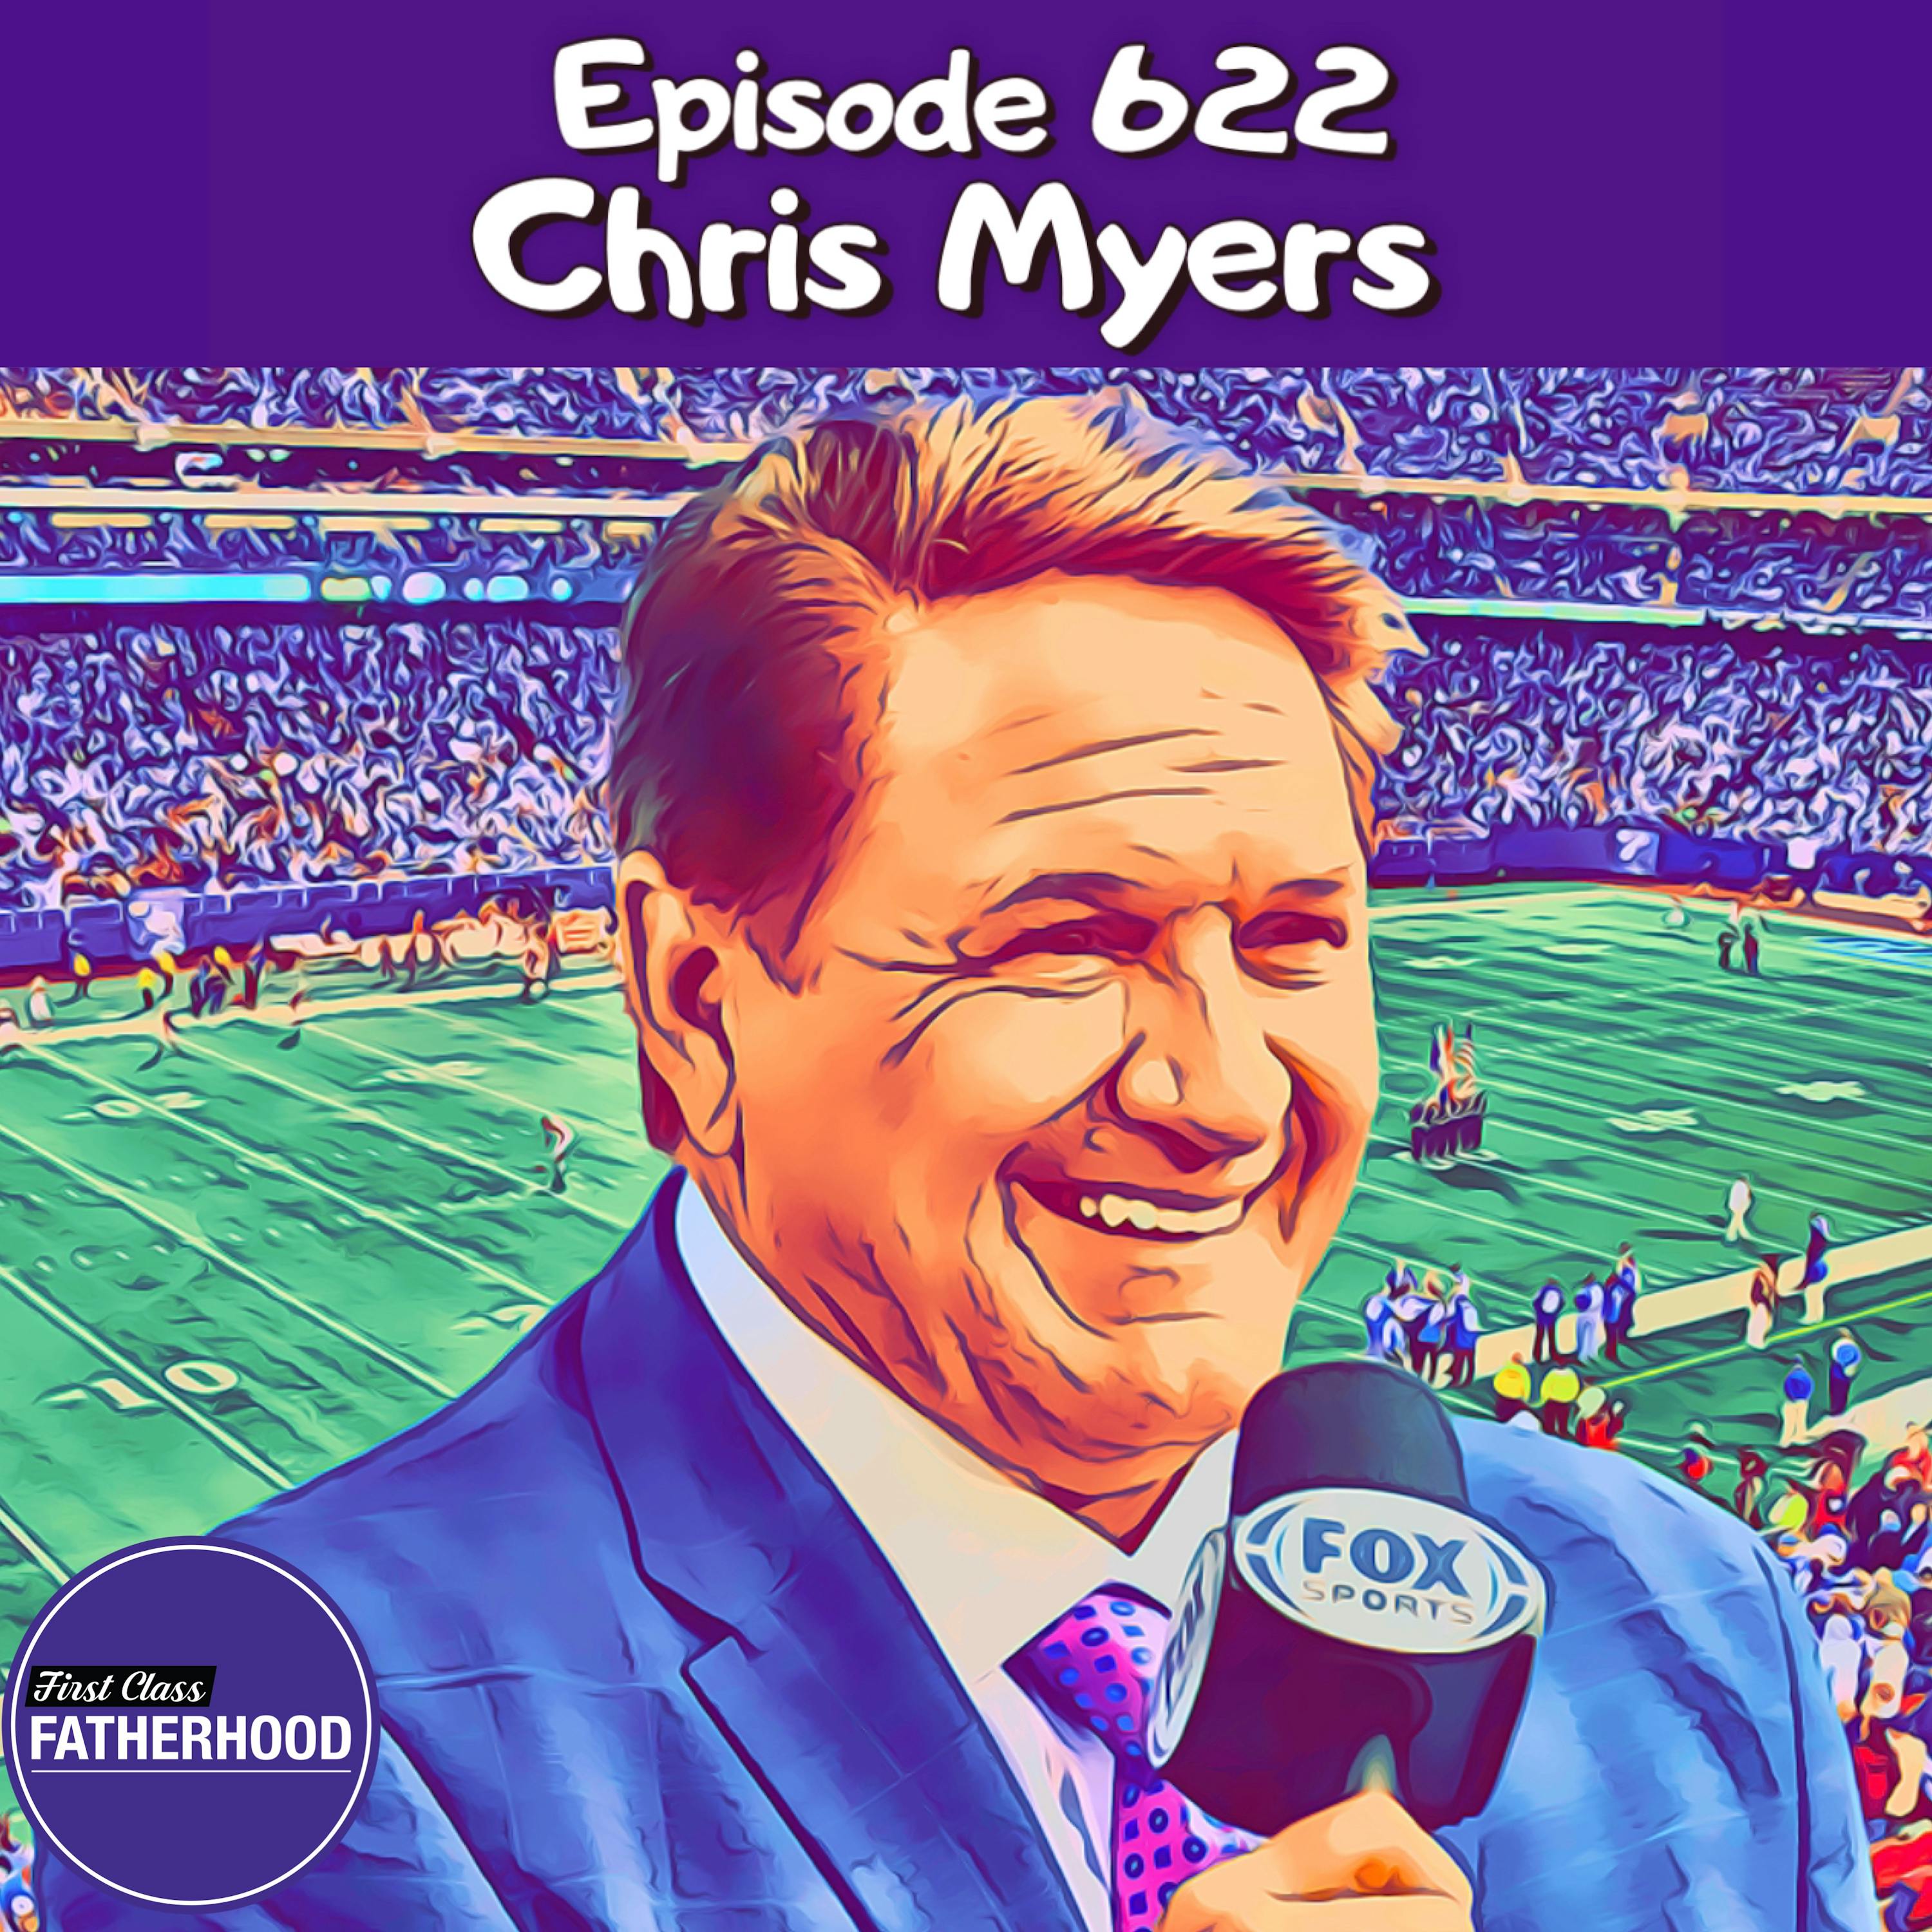 #622 Chris Myers